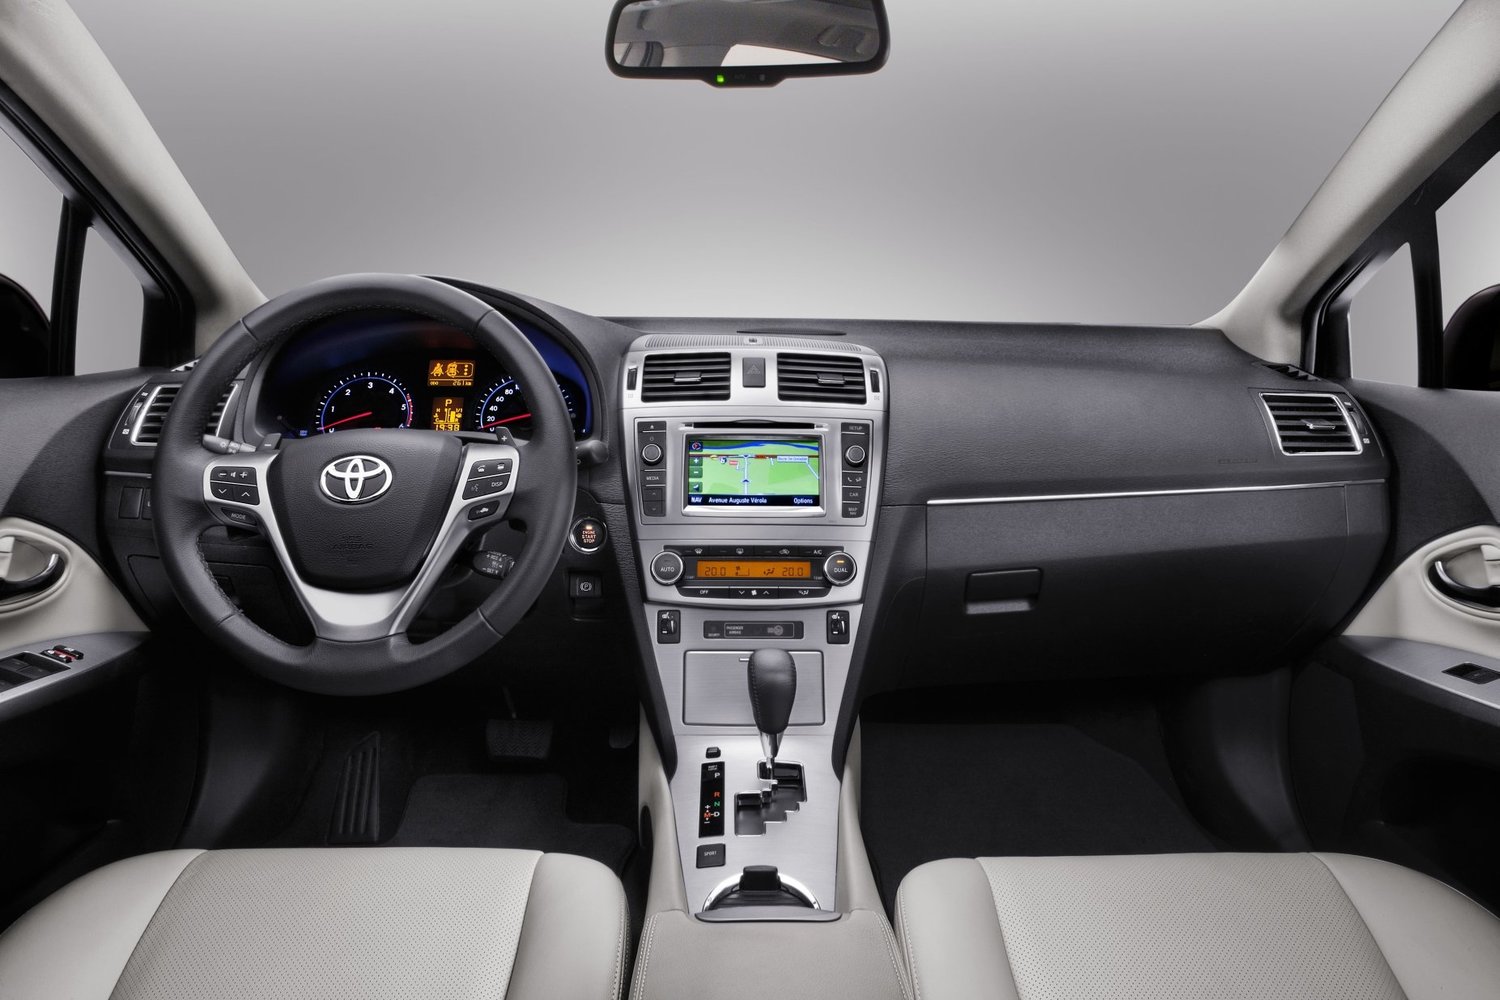 седан Toyota Avensis 2011 - 2015г выпуска модификация 1.6 MT (132 л.с.)